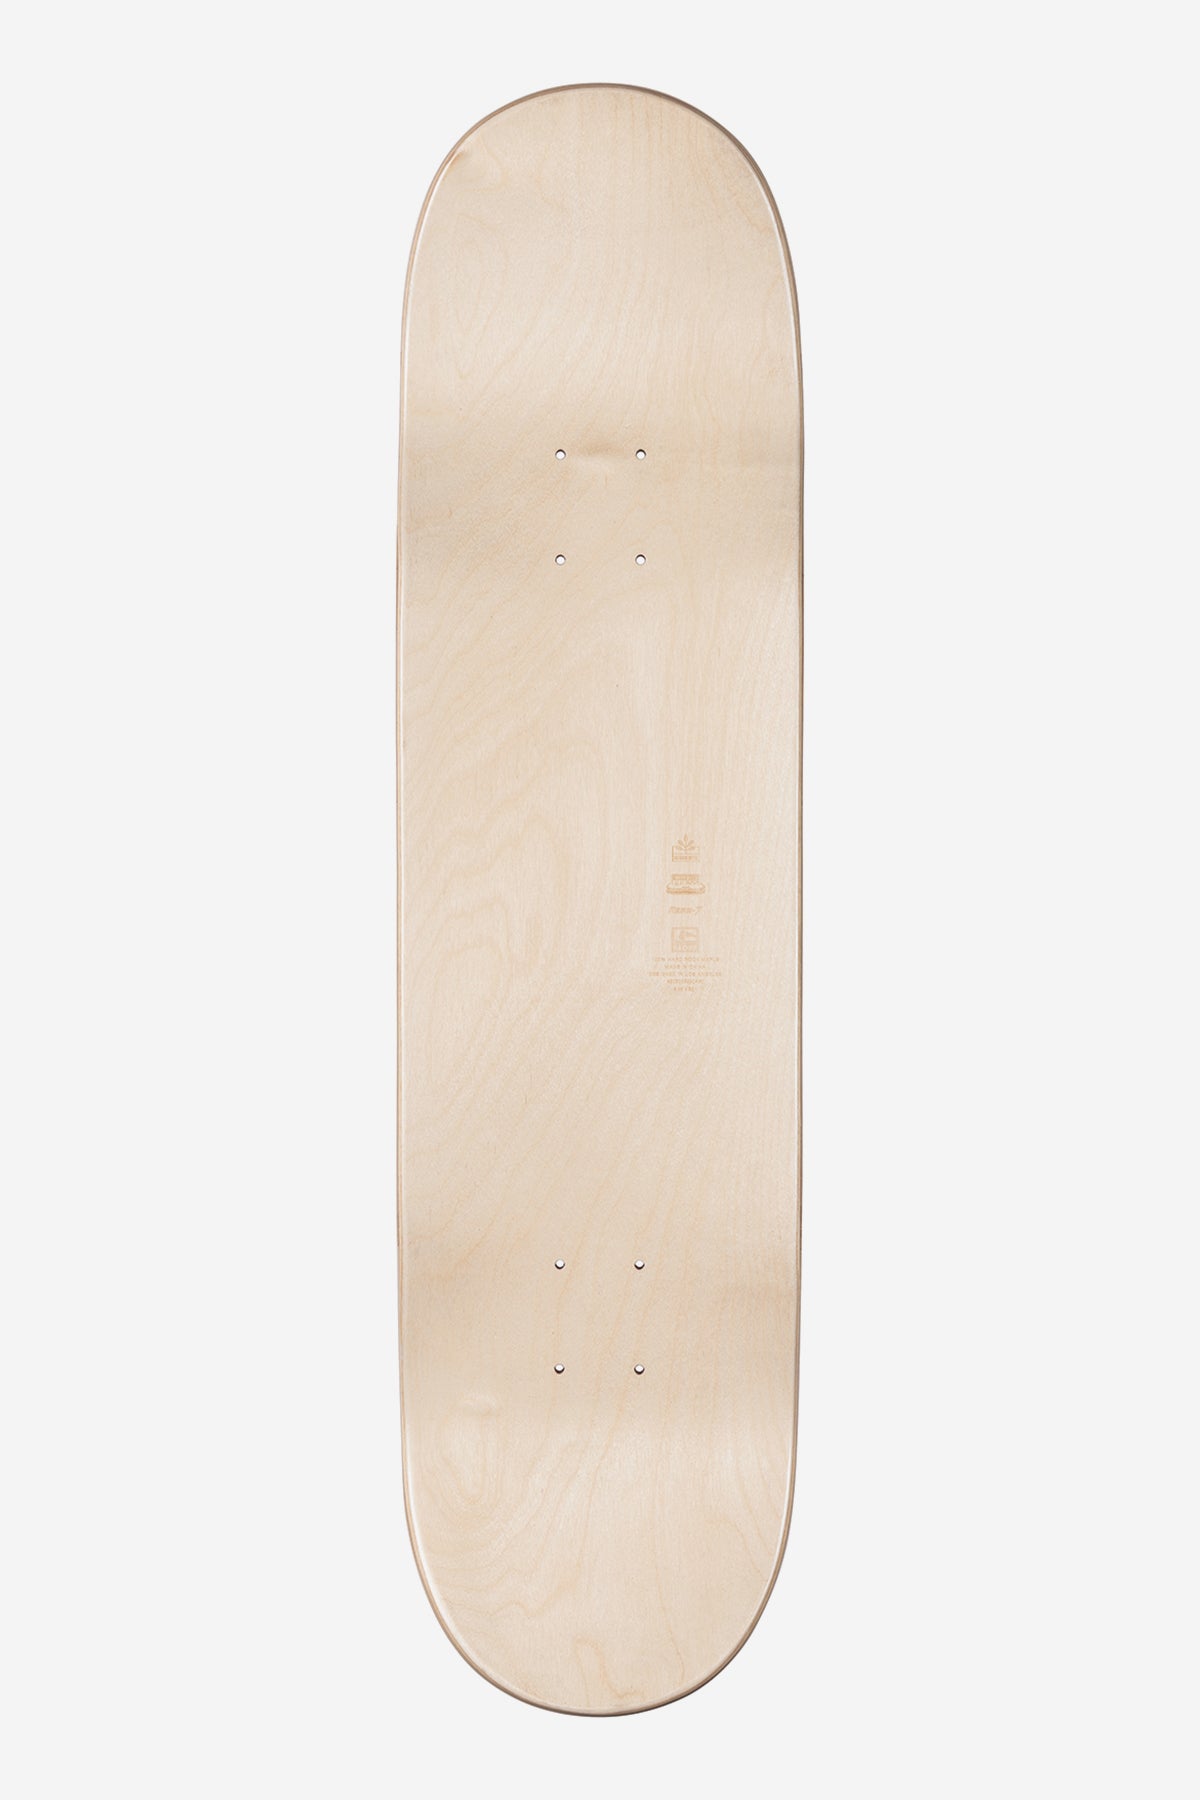 Globe - Gutstock - Aus White- 8.0" Skateboard Deck